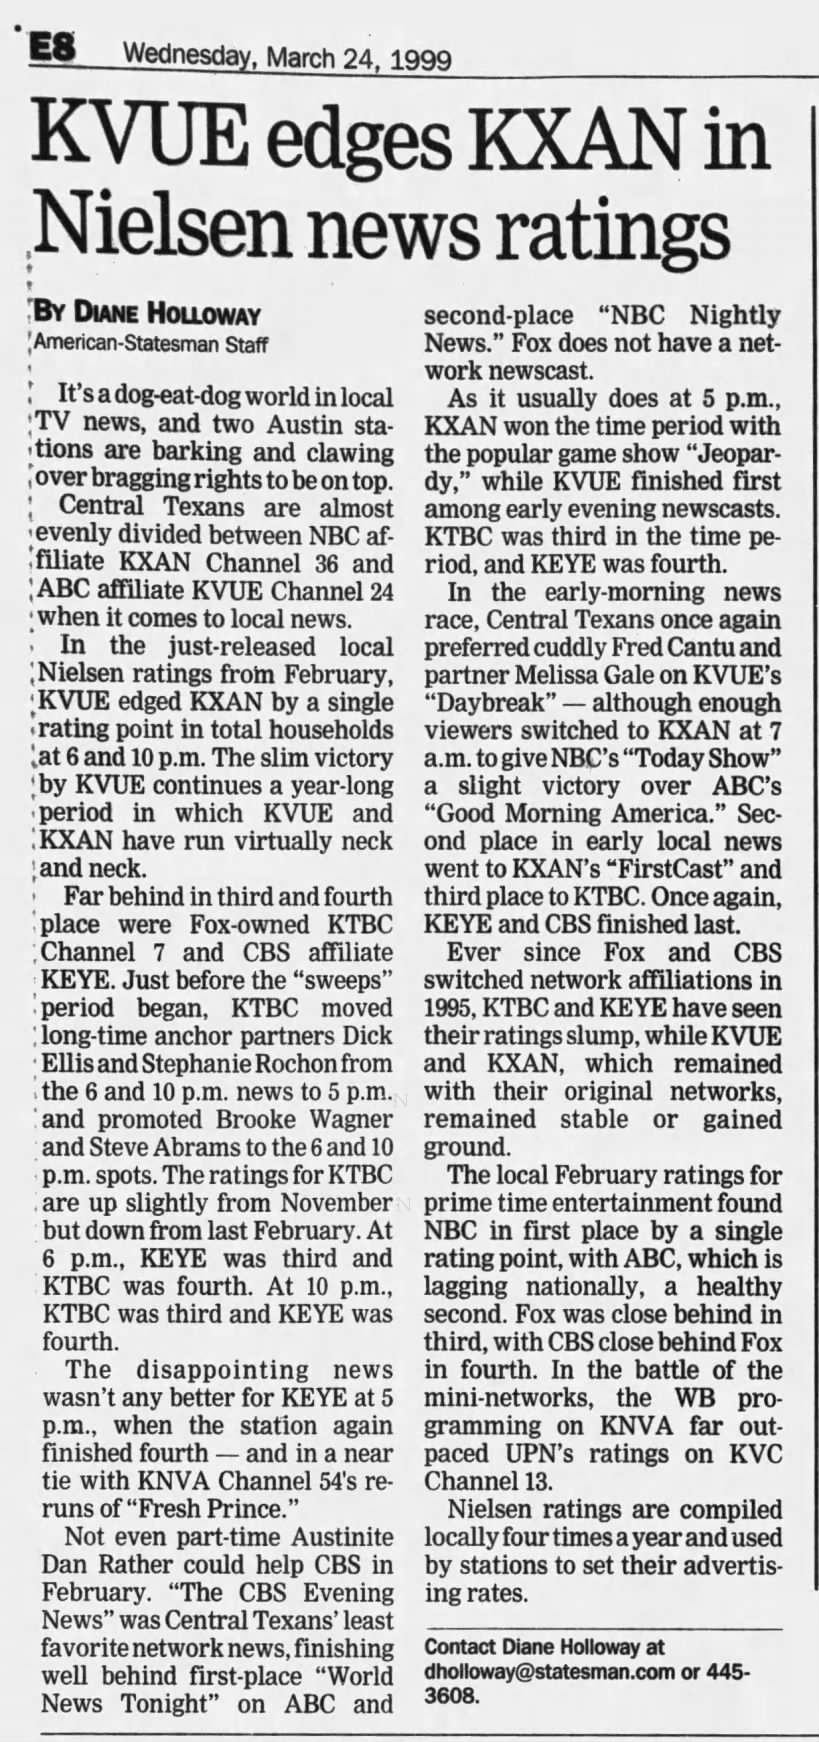 KVUE edges KXAN in Nielsen news ratings